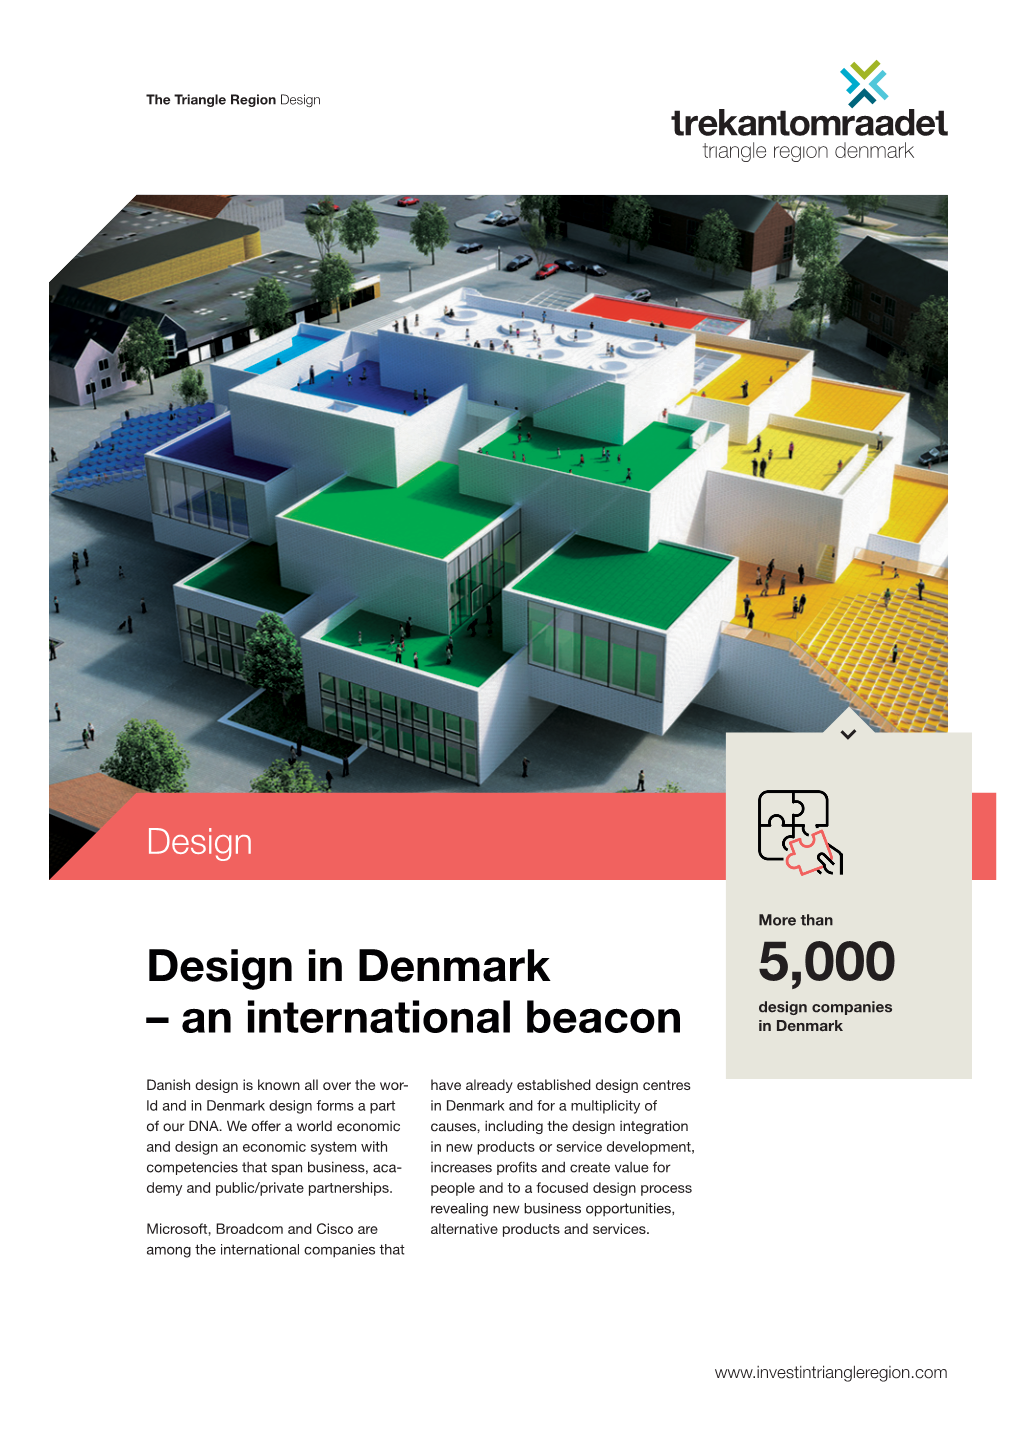 Design in Denmark – an International Beacon